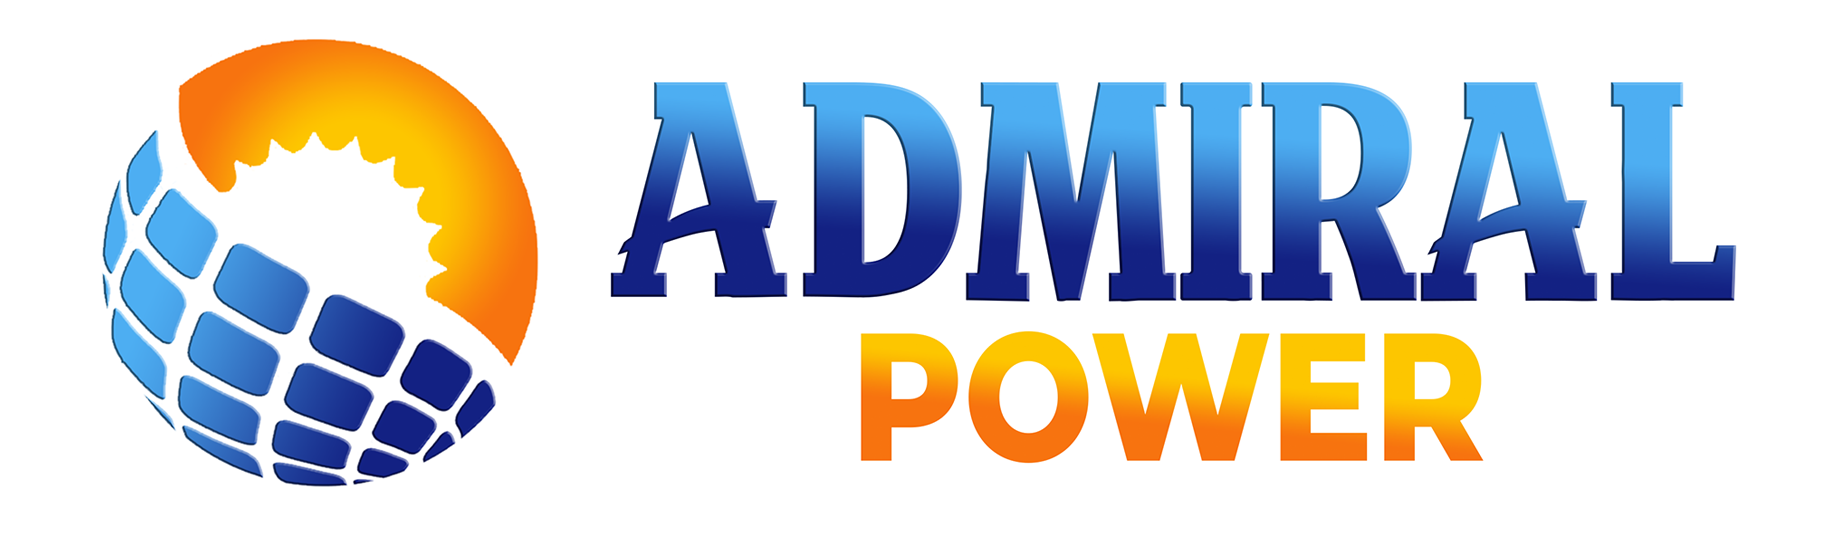 Admiral-Power-Logo-002